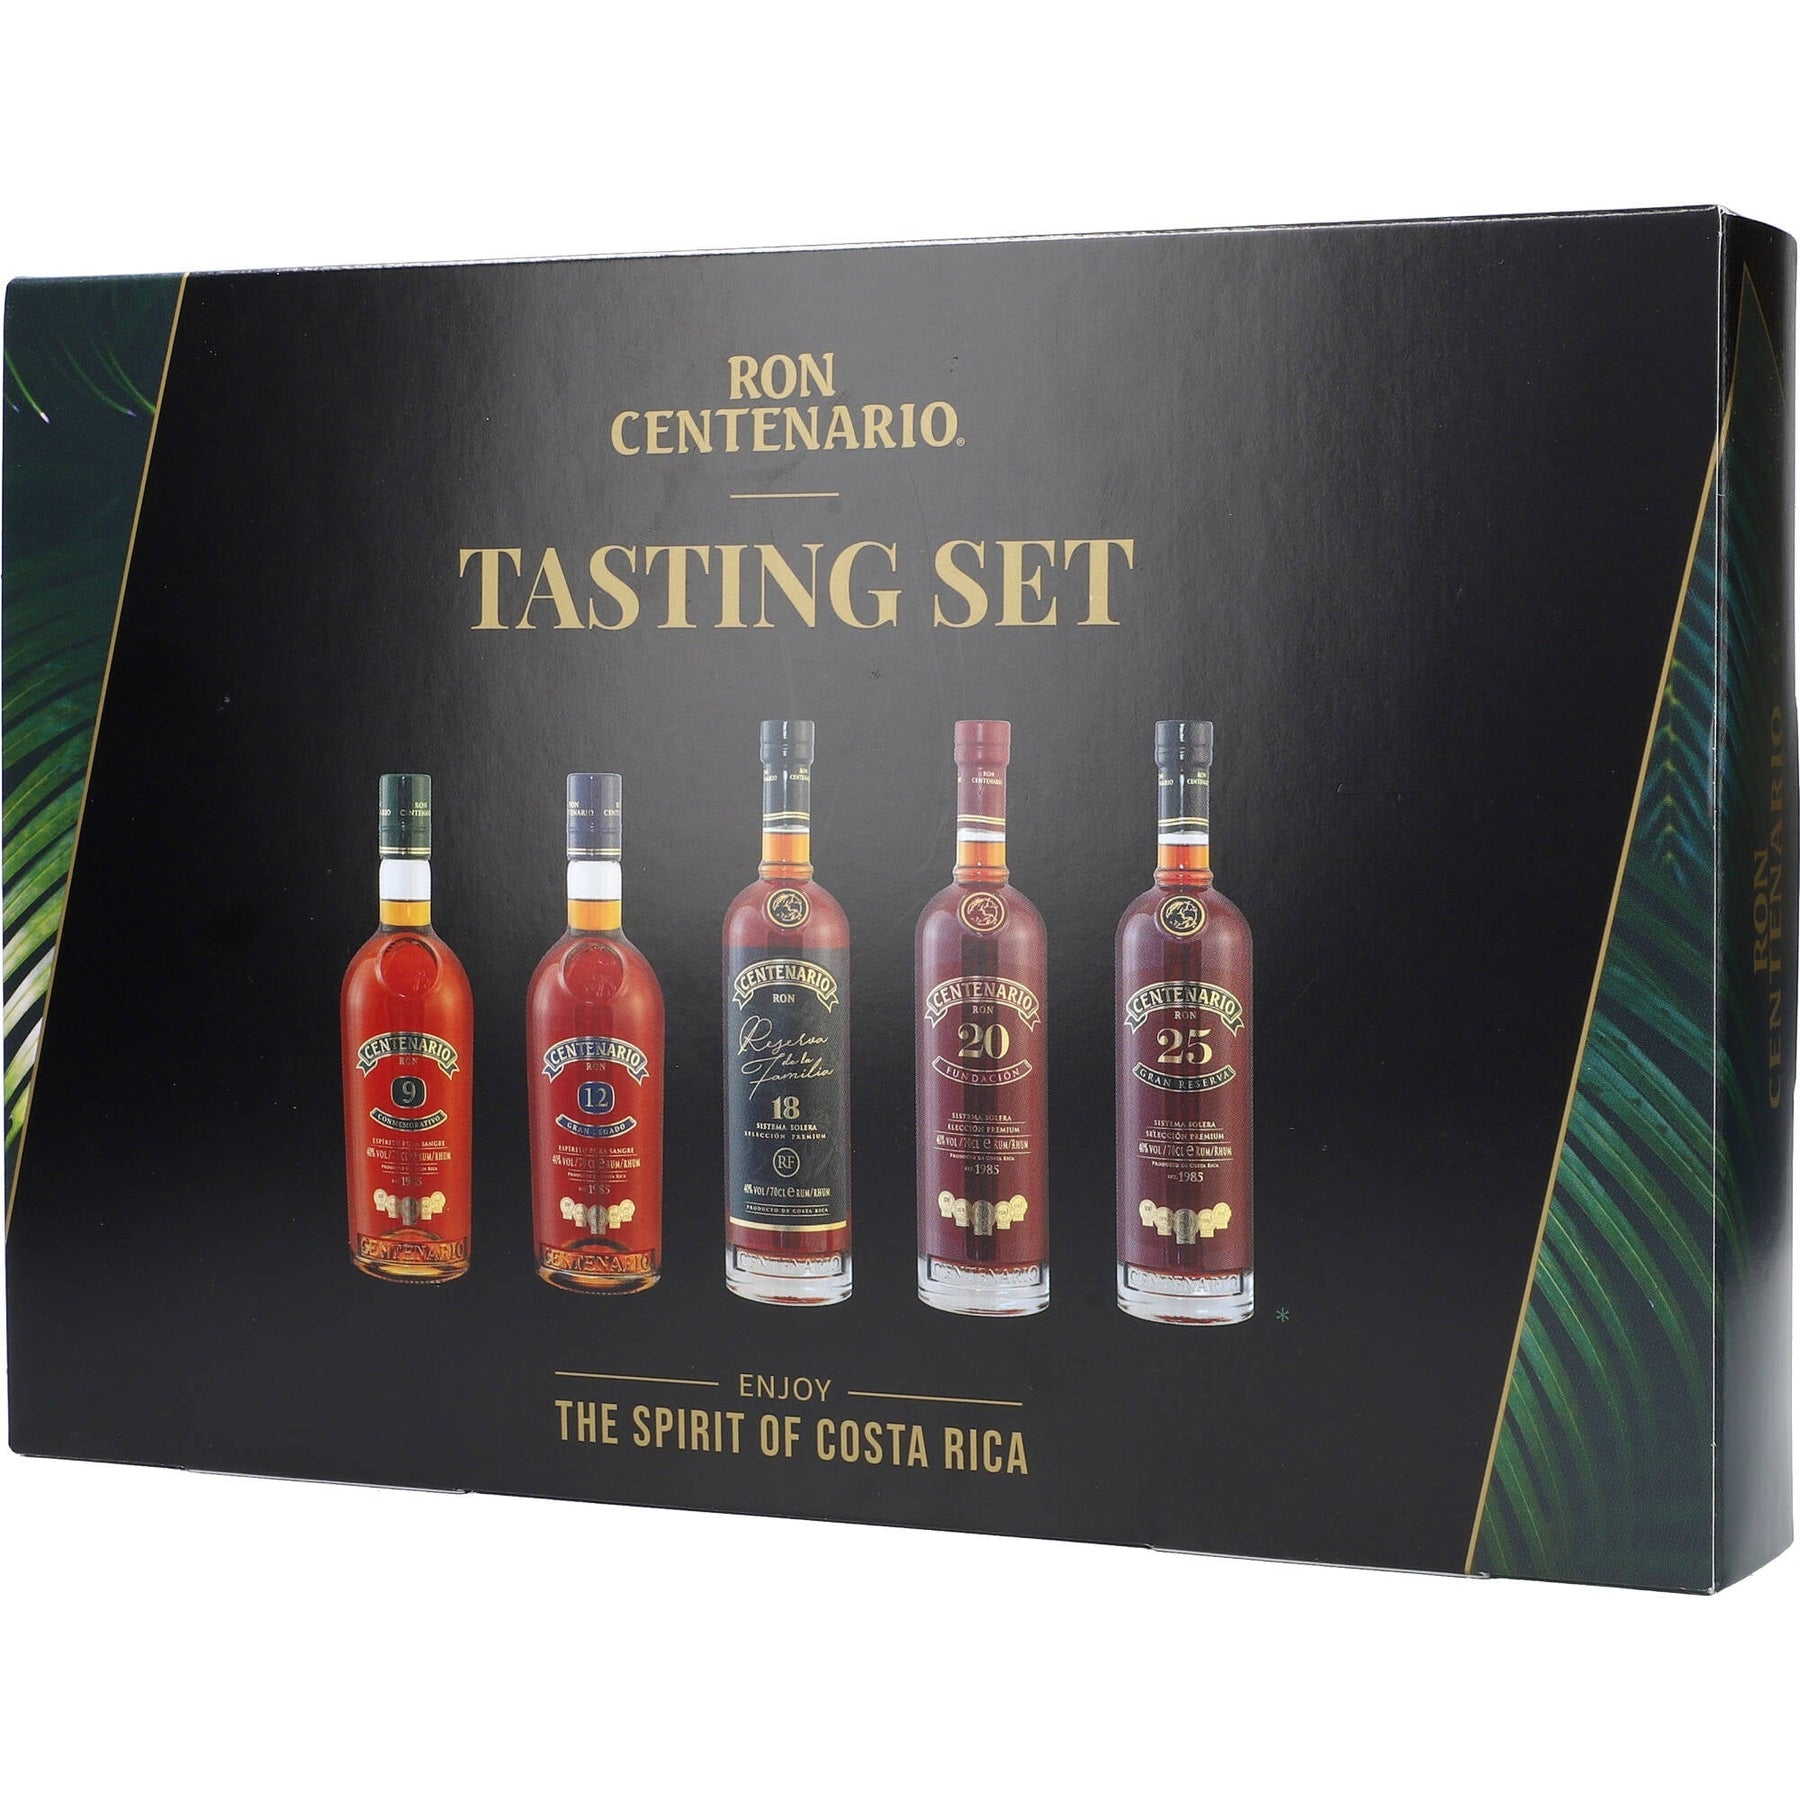 Ron Centenario AllSpirits 0,05 5x – Set ltr. Rum Tasting